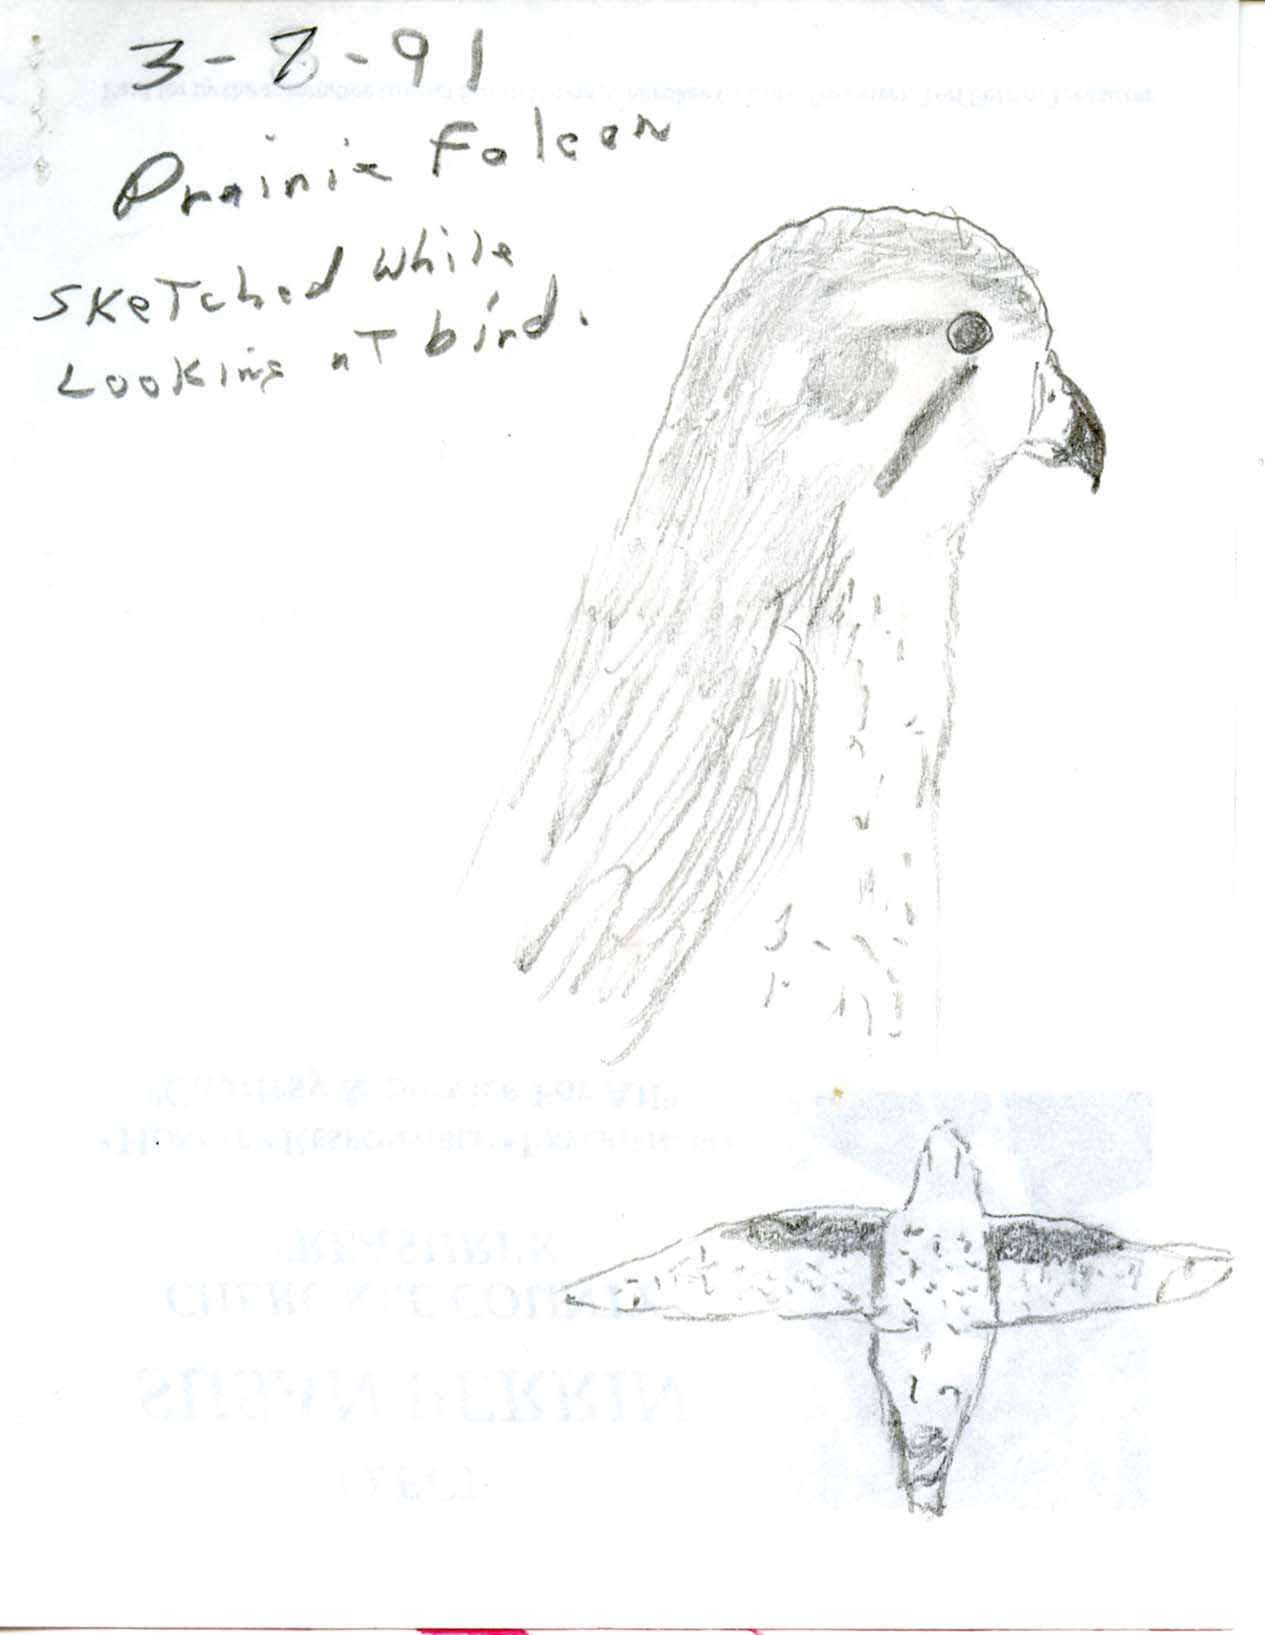 Rare bird sighting for Prairie Falcon in Iowa, 1991